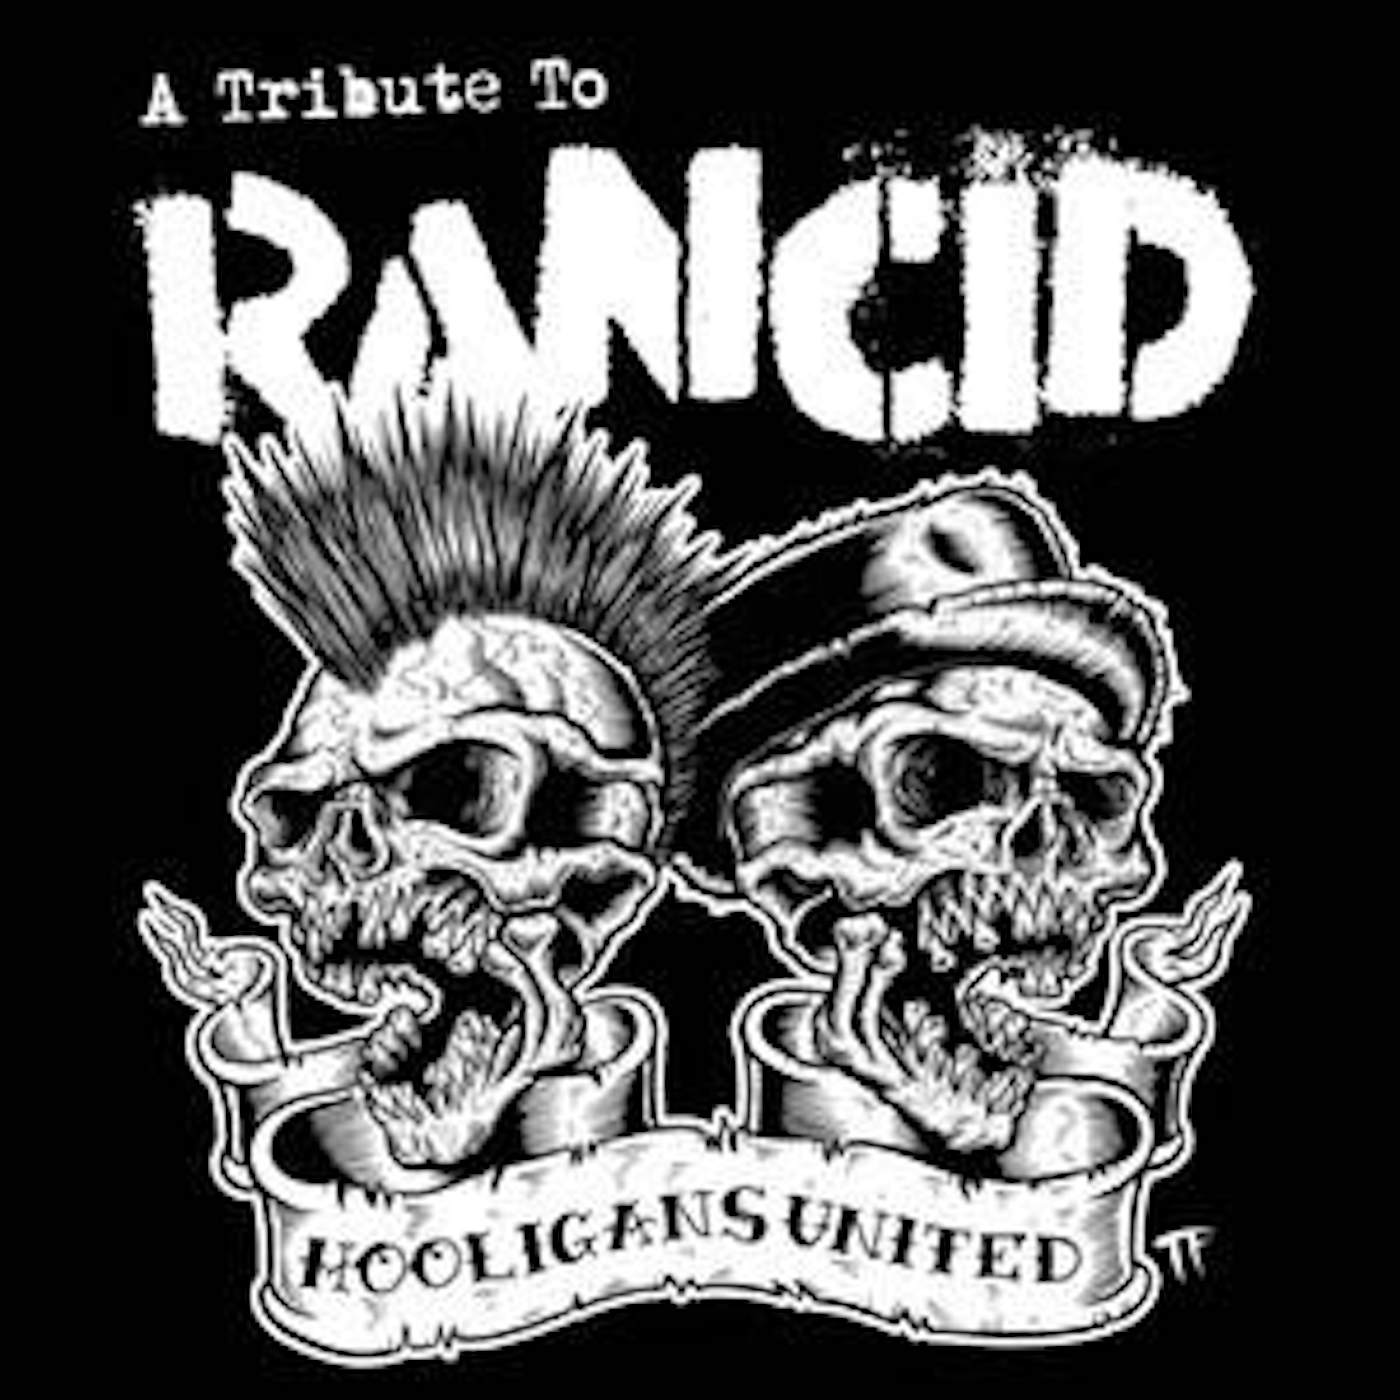 Road Dog Merch Rancid Tribute Record Hooligans United CD